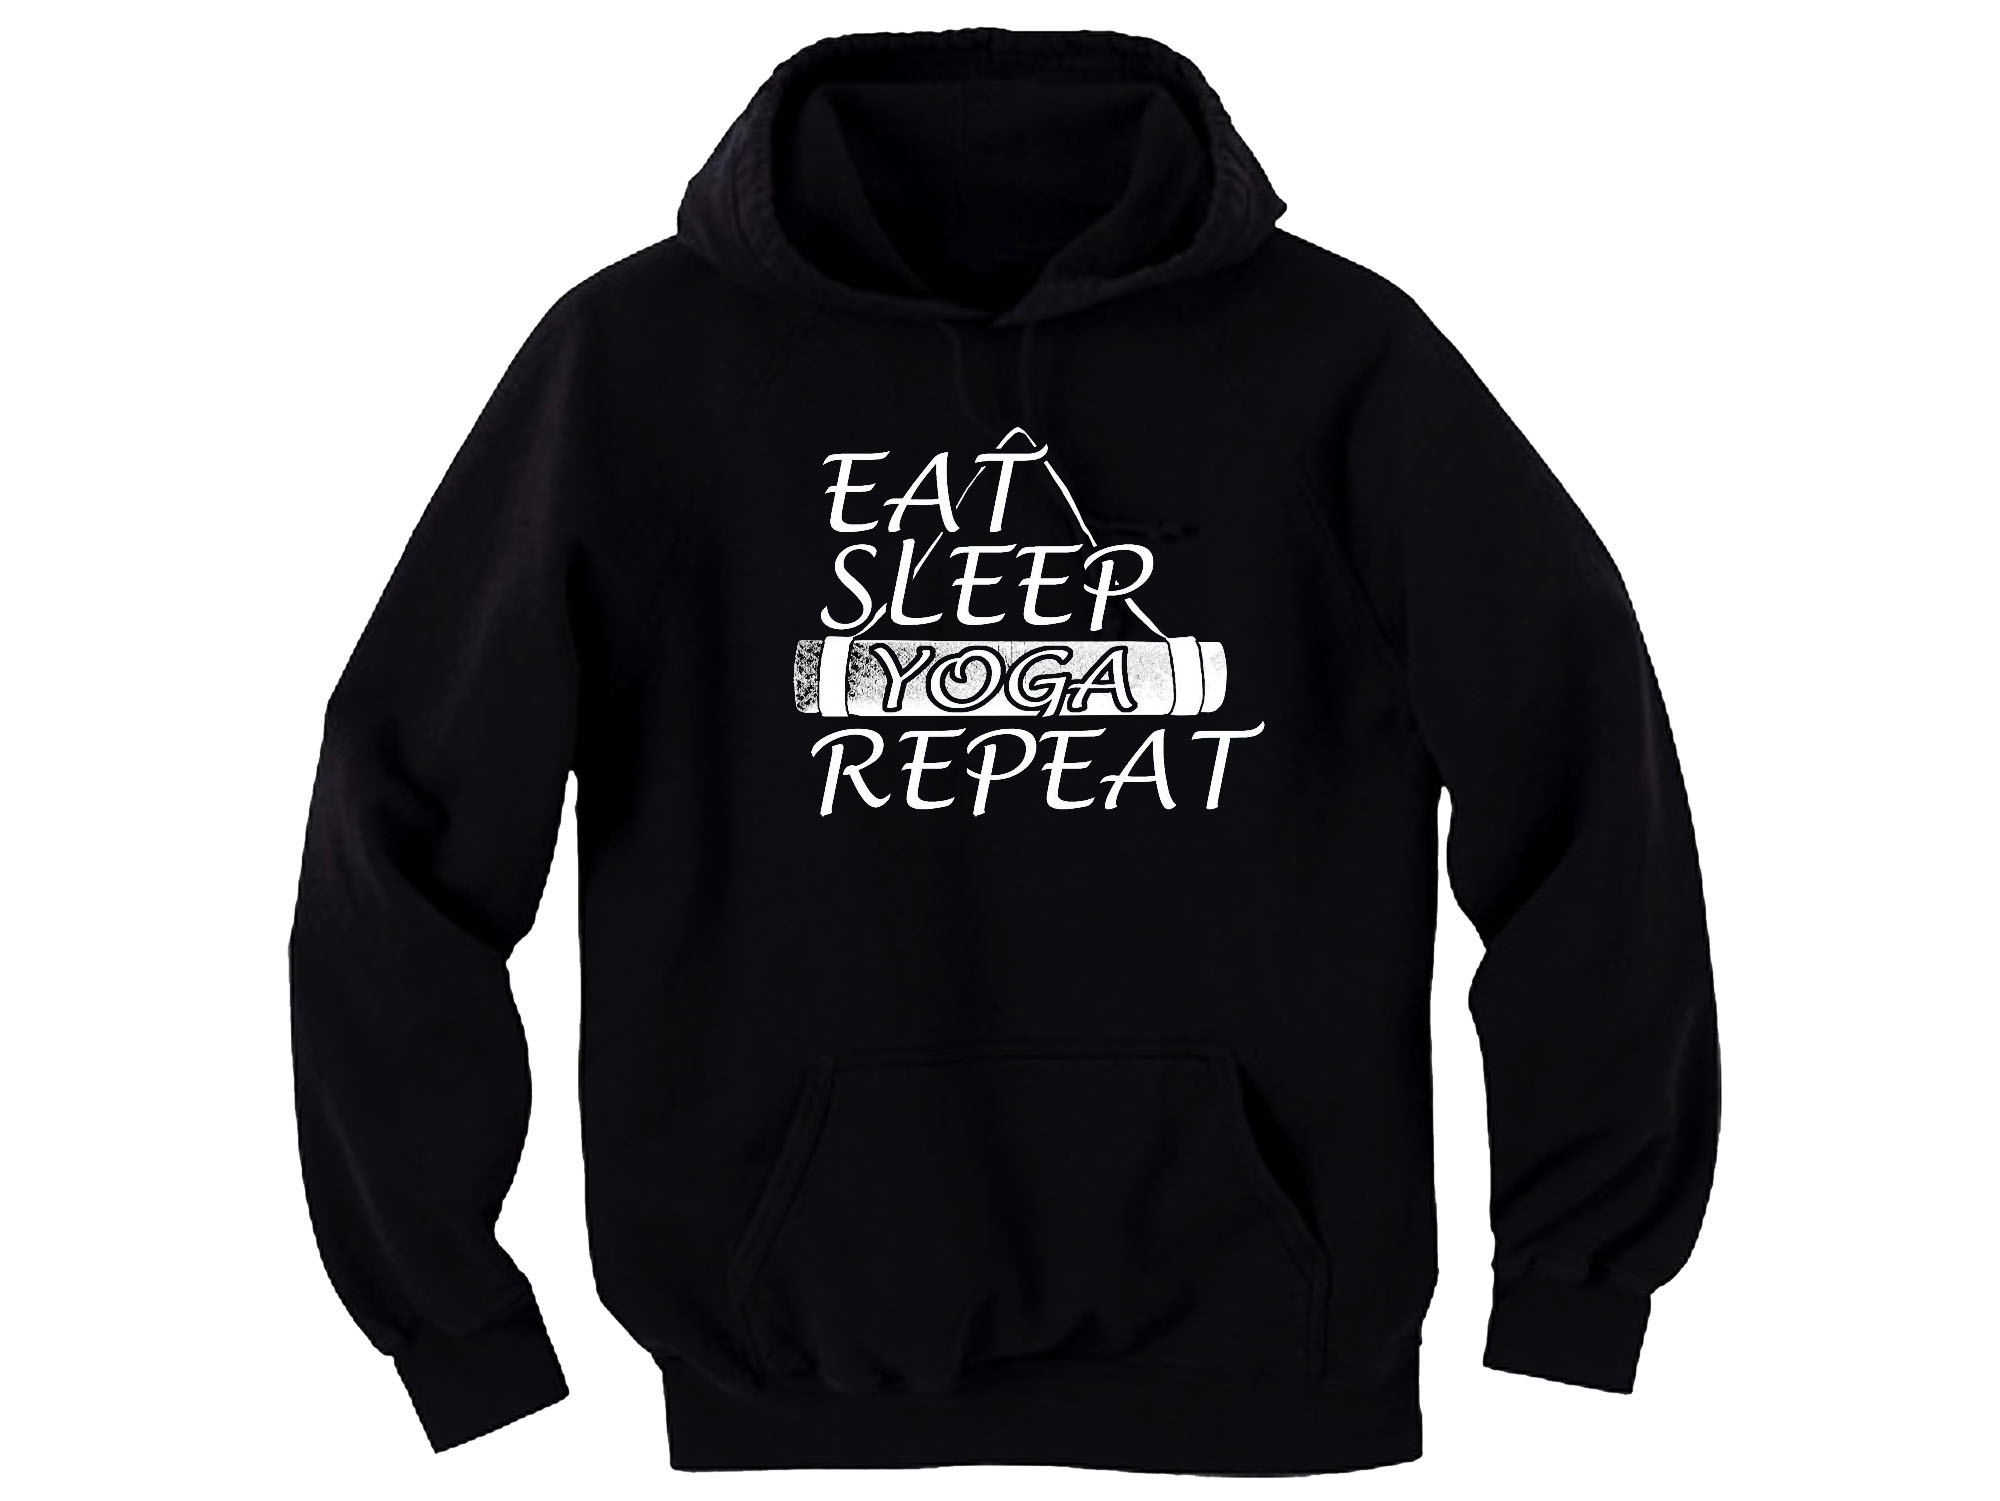 Eat sleep yoga repeat black hoodie-Great gift idea